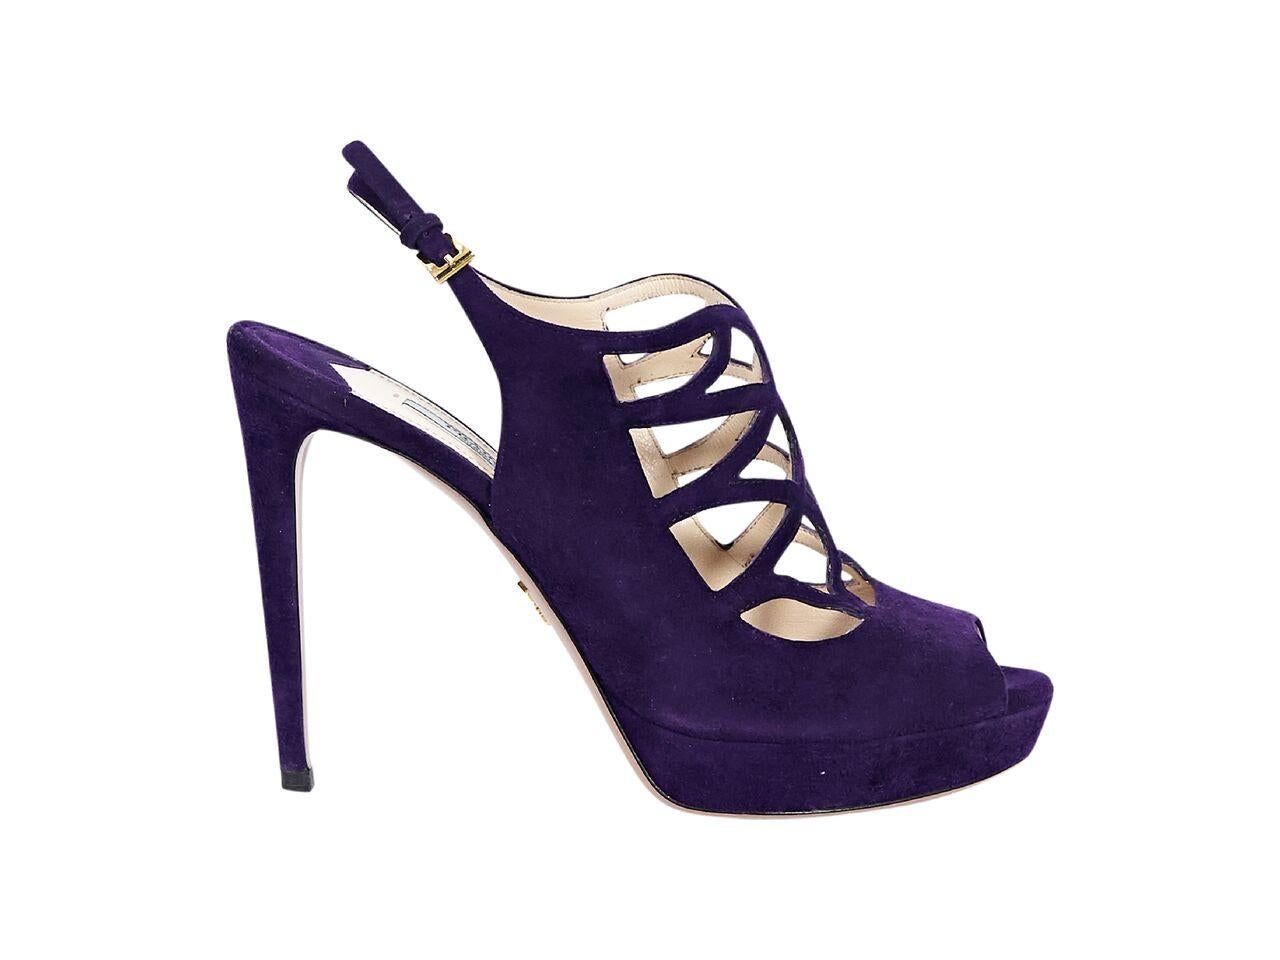 Product details:  Purple suede platform pumps by Prada.  Cutout design.  Adjustable slingback strap.  Peep toe.  5